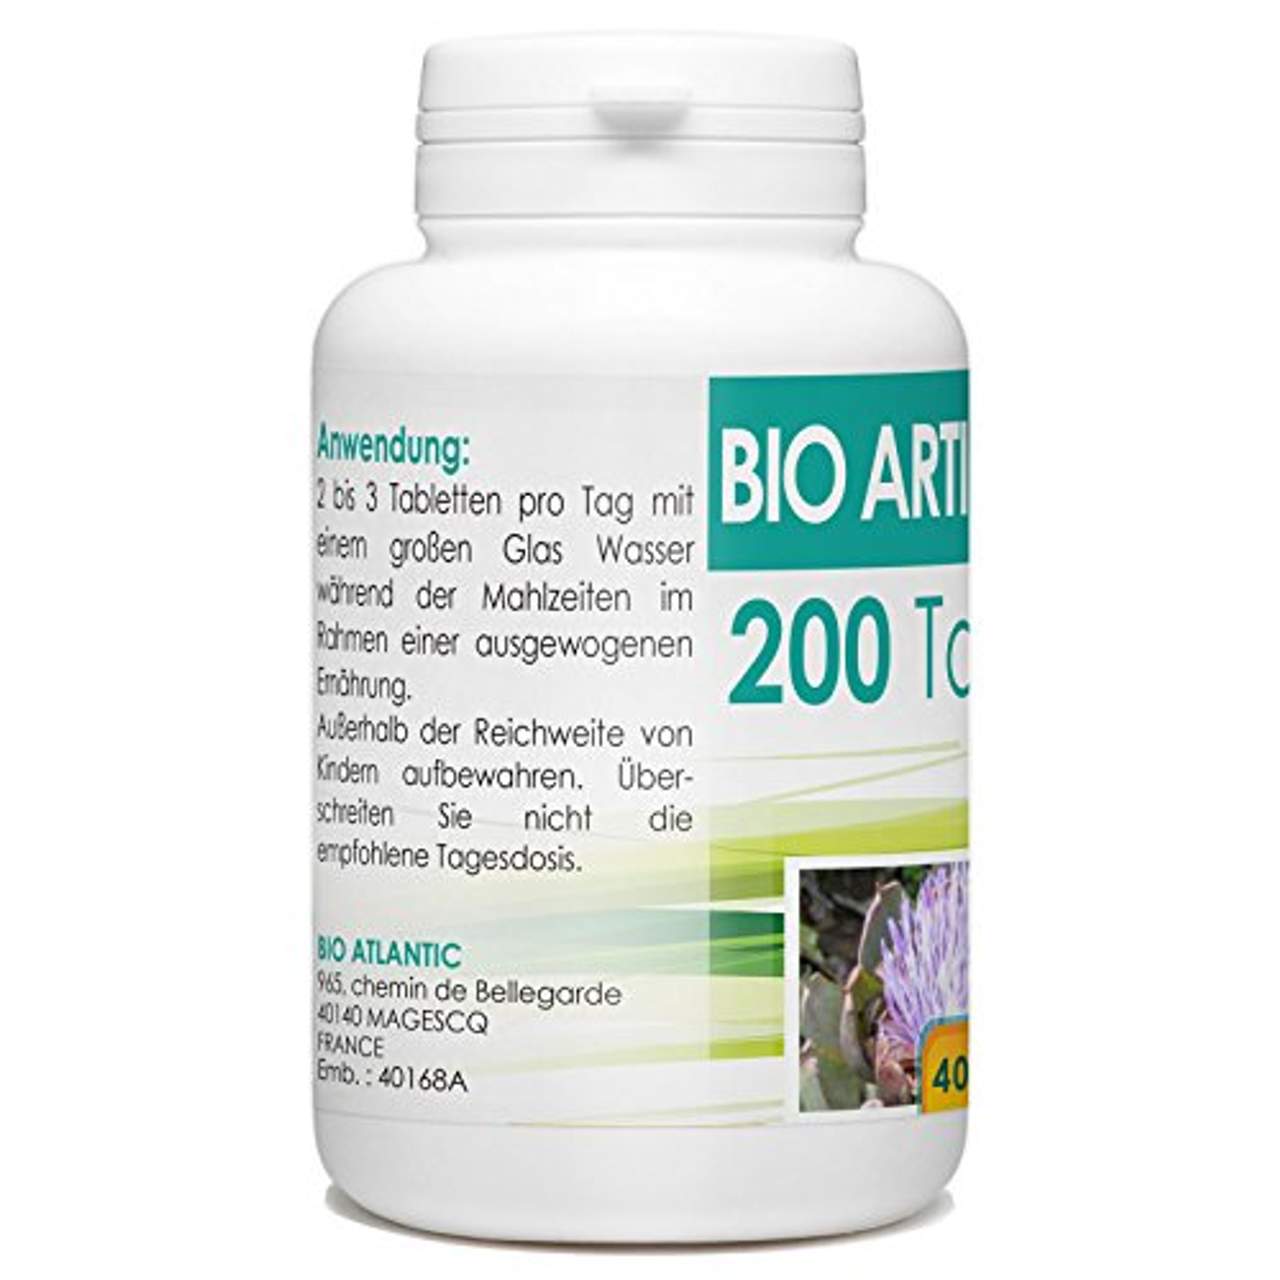 Bio Artischocke 400 mg 200 Tabletten